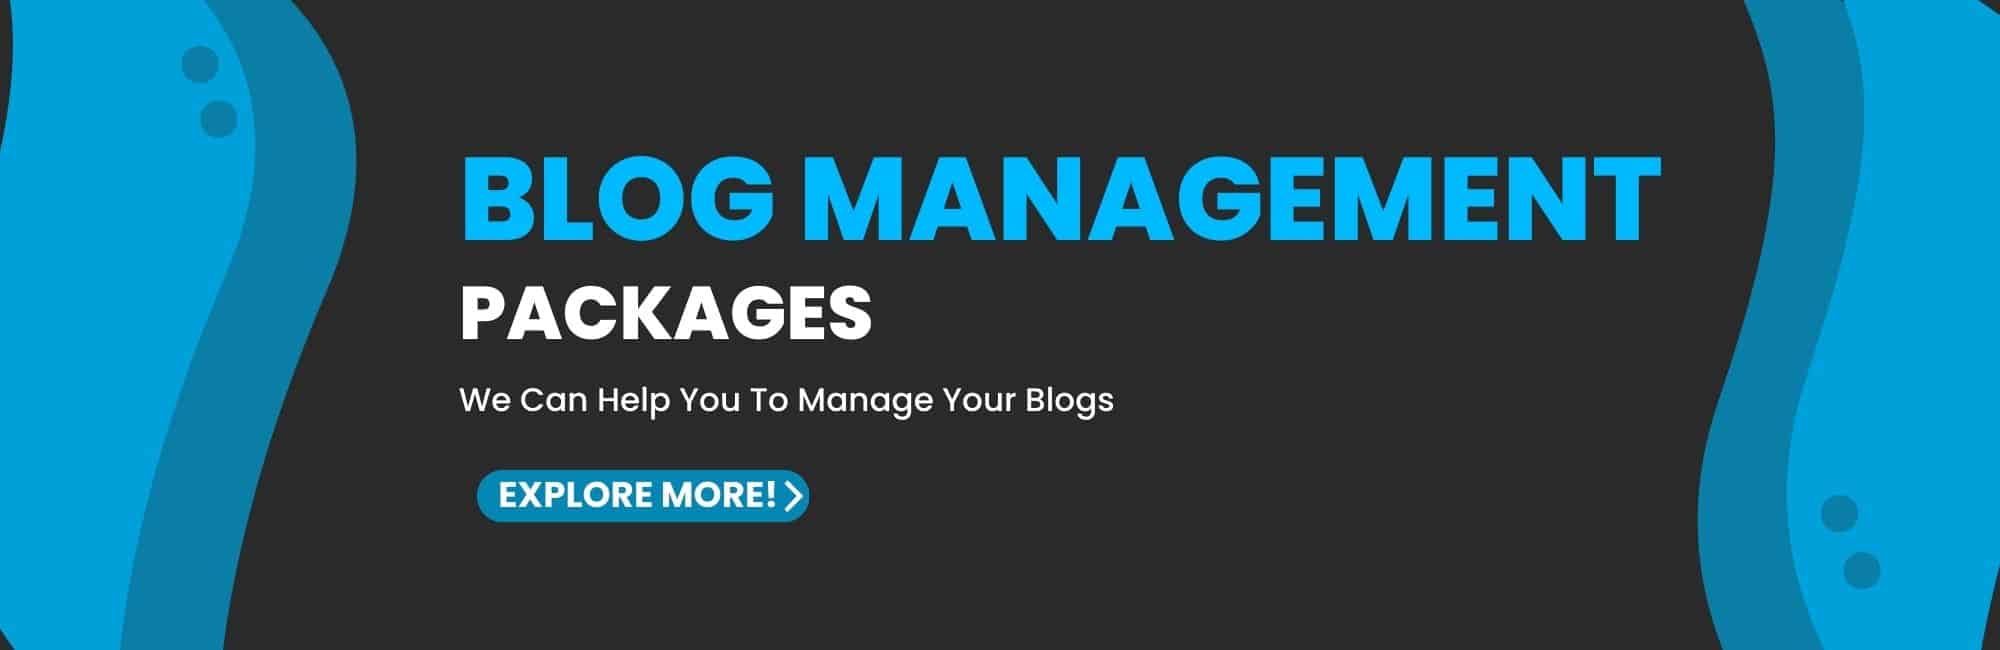 blog management packages